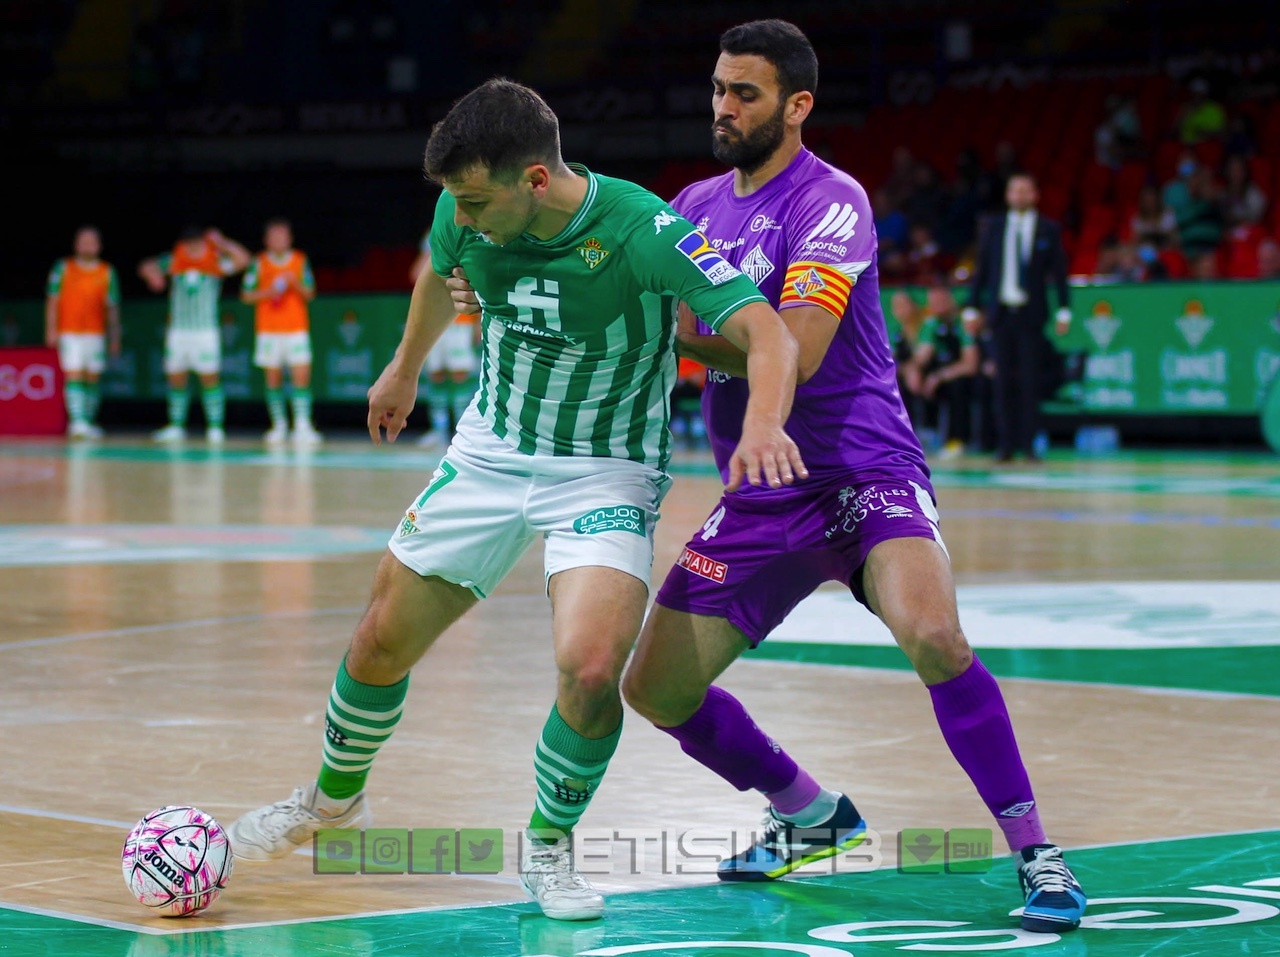 J-25-Real-Betis-FS-vs-Palma-Futsal216